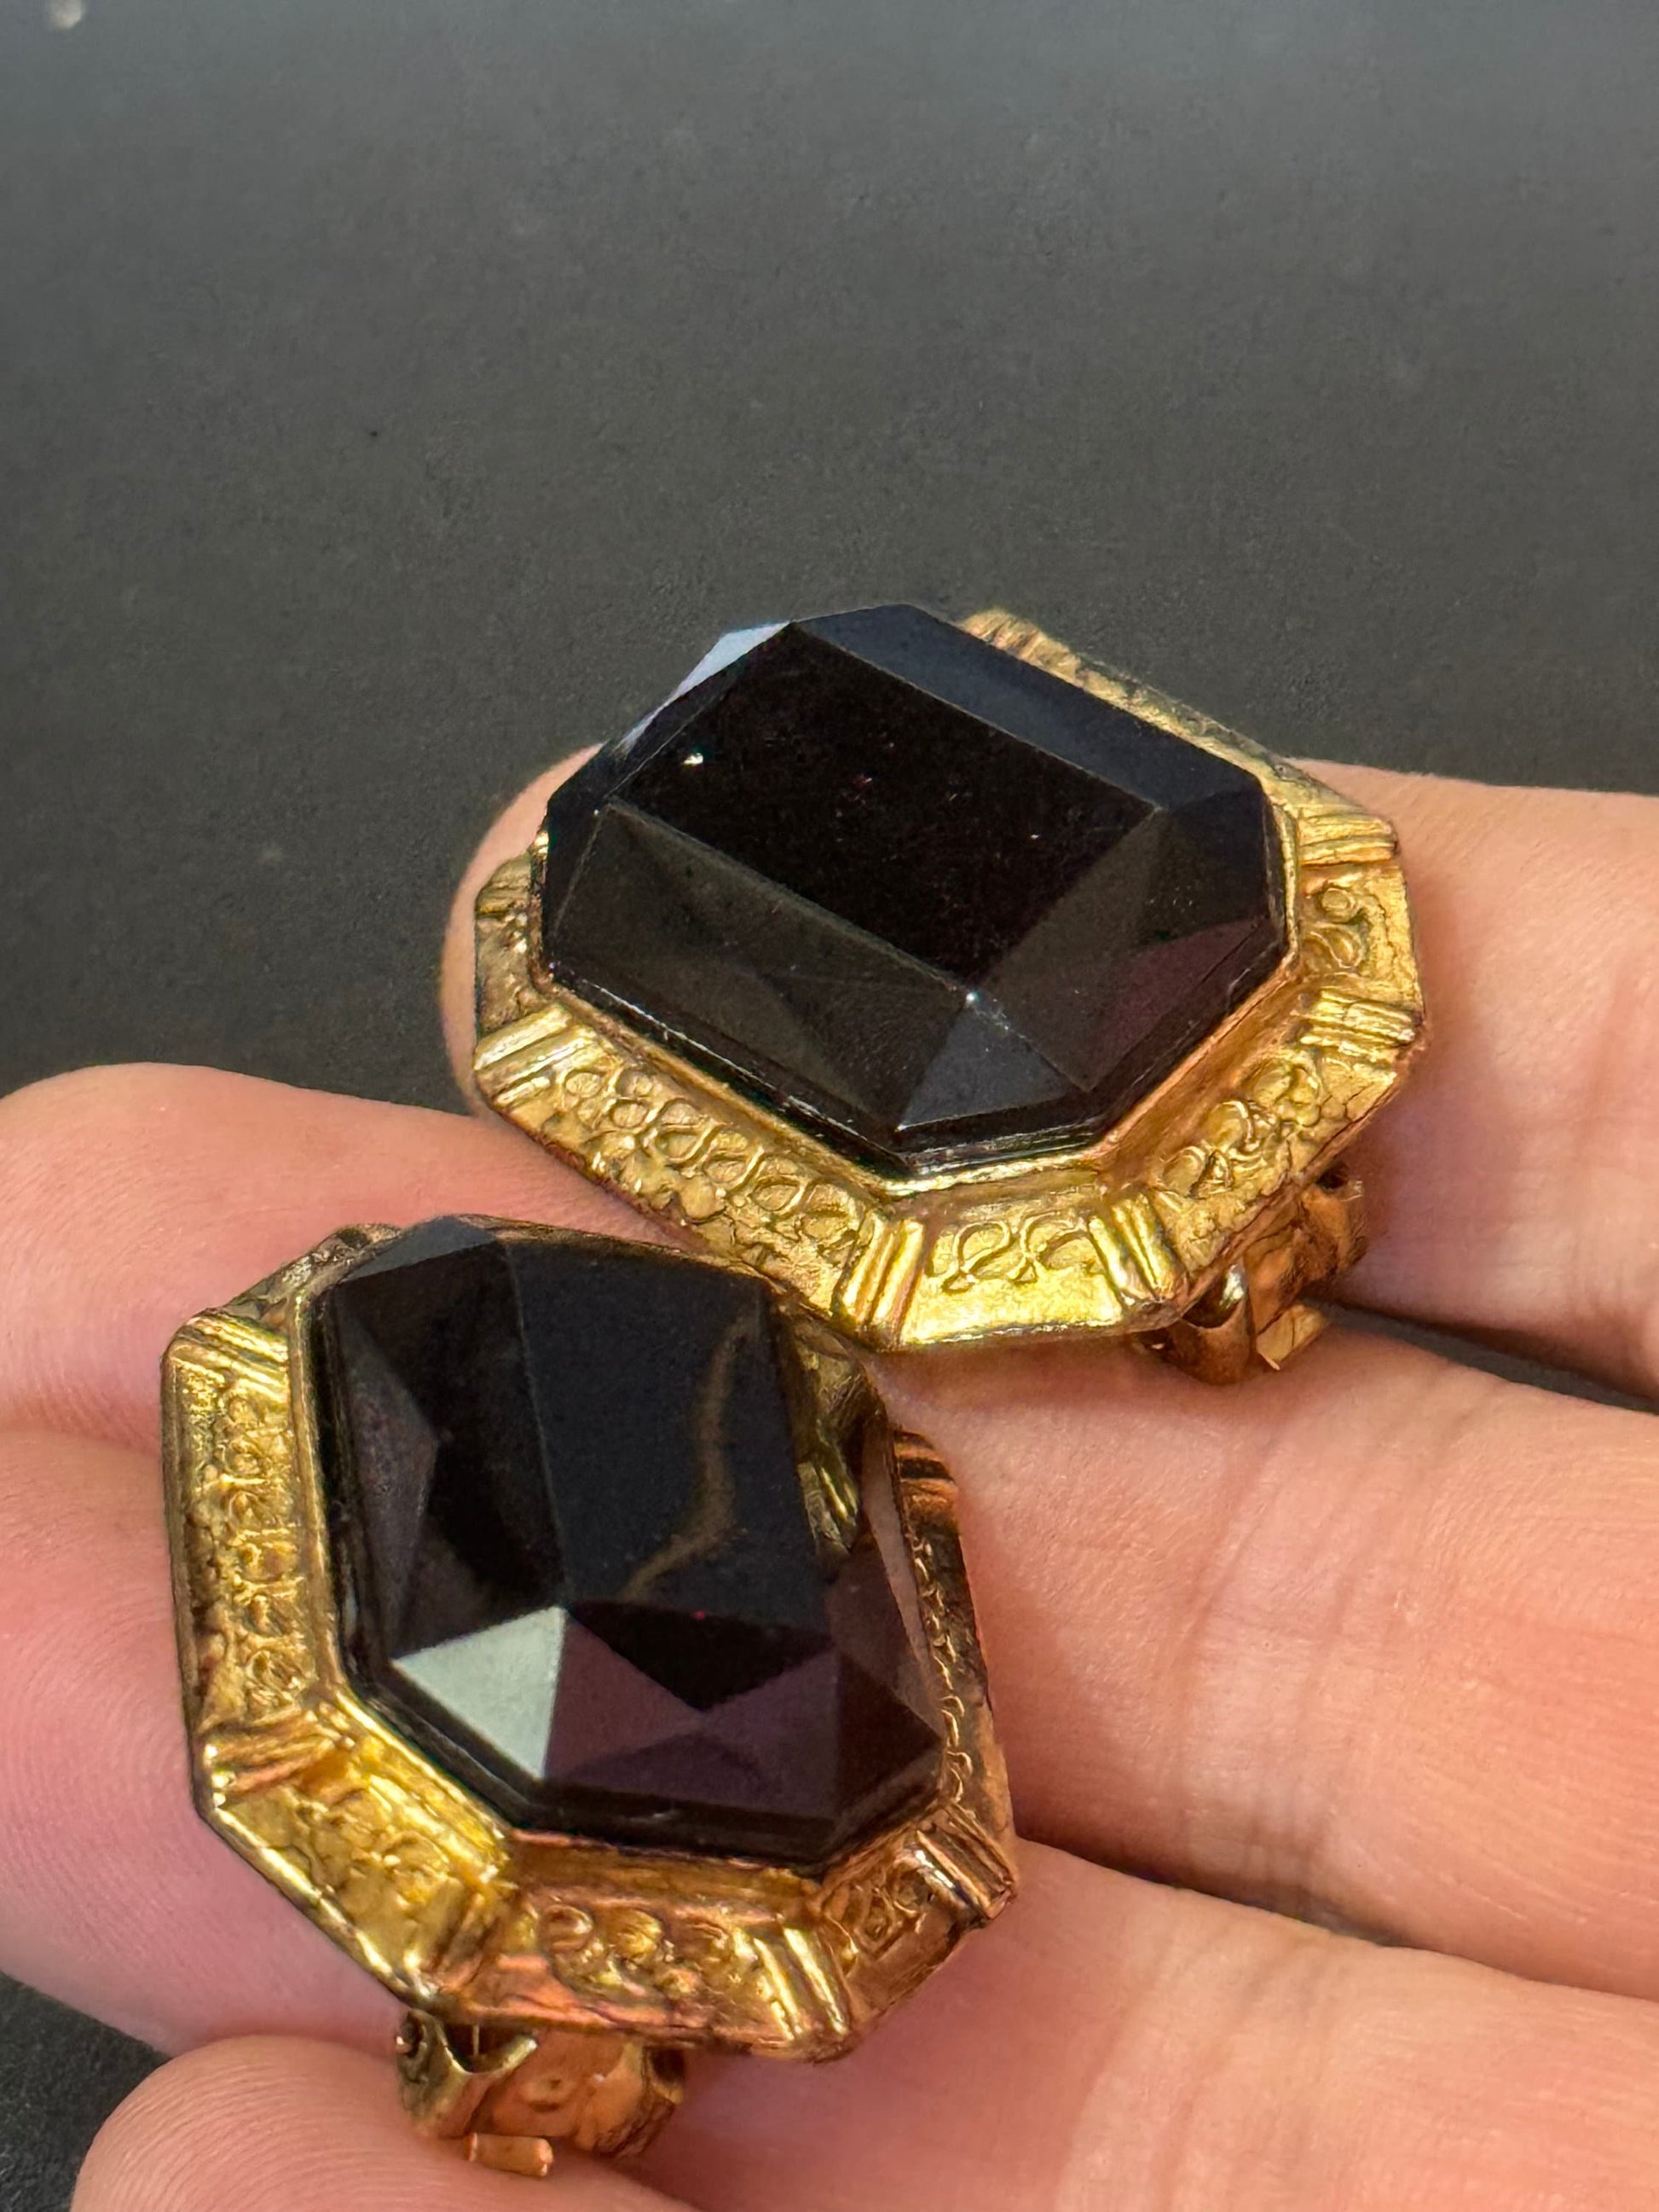 True vintage oversized 3cm Gold tone ornate octagonal black cabochon clip on earrings 1980s